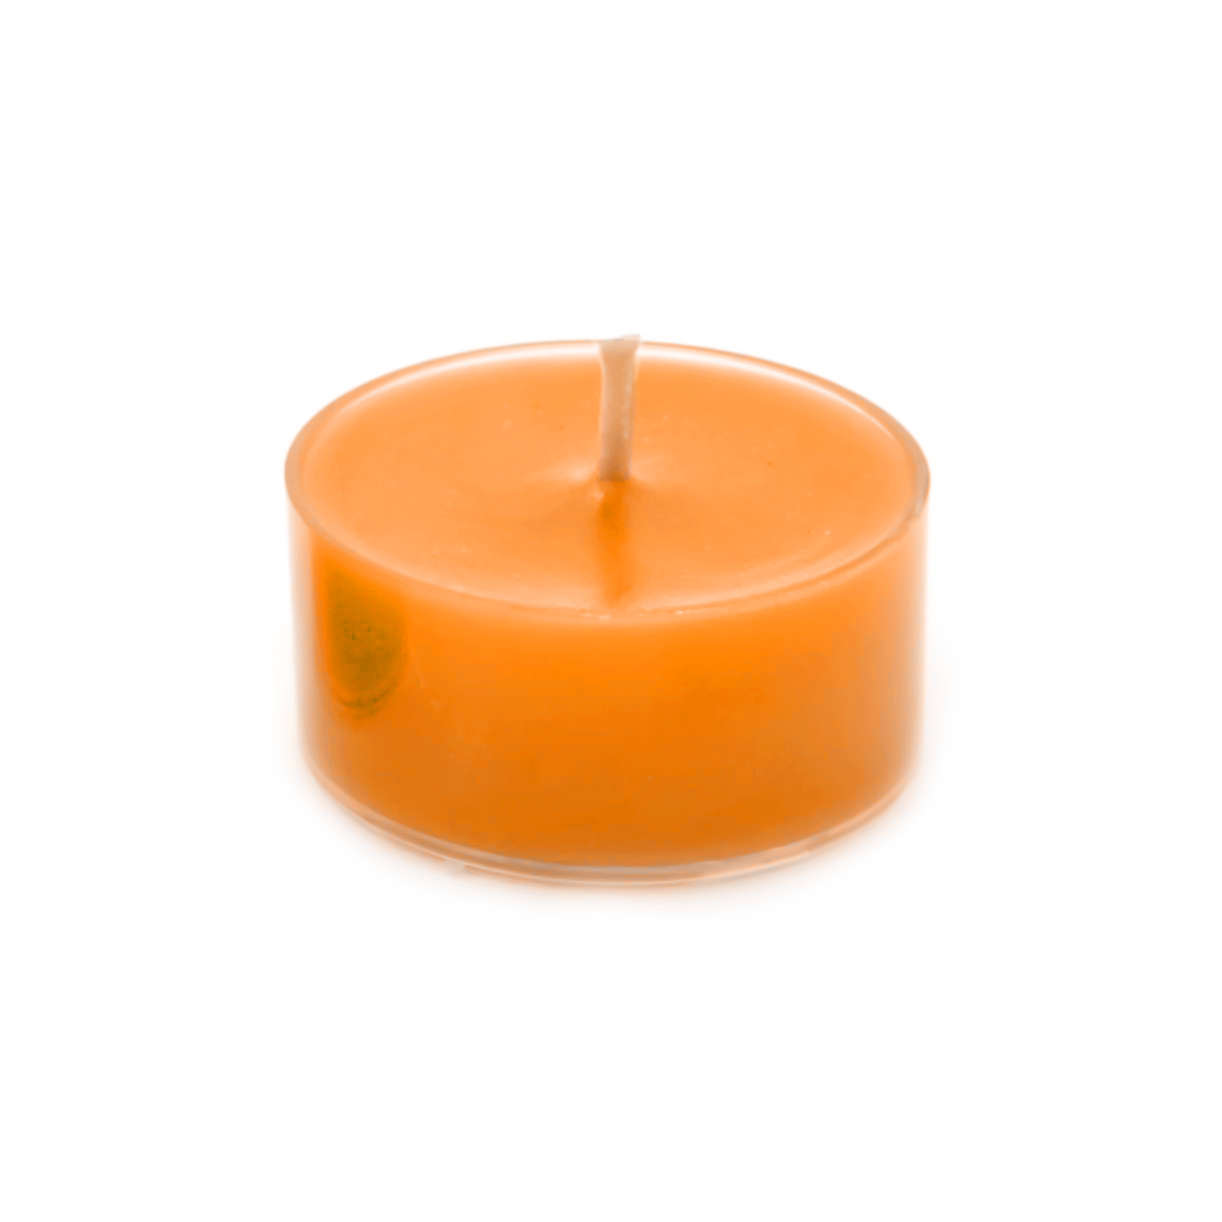 Orange Zest Tealights scented candles